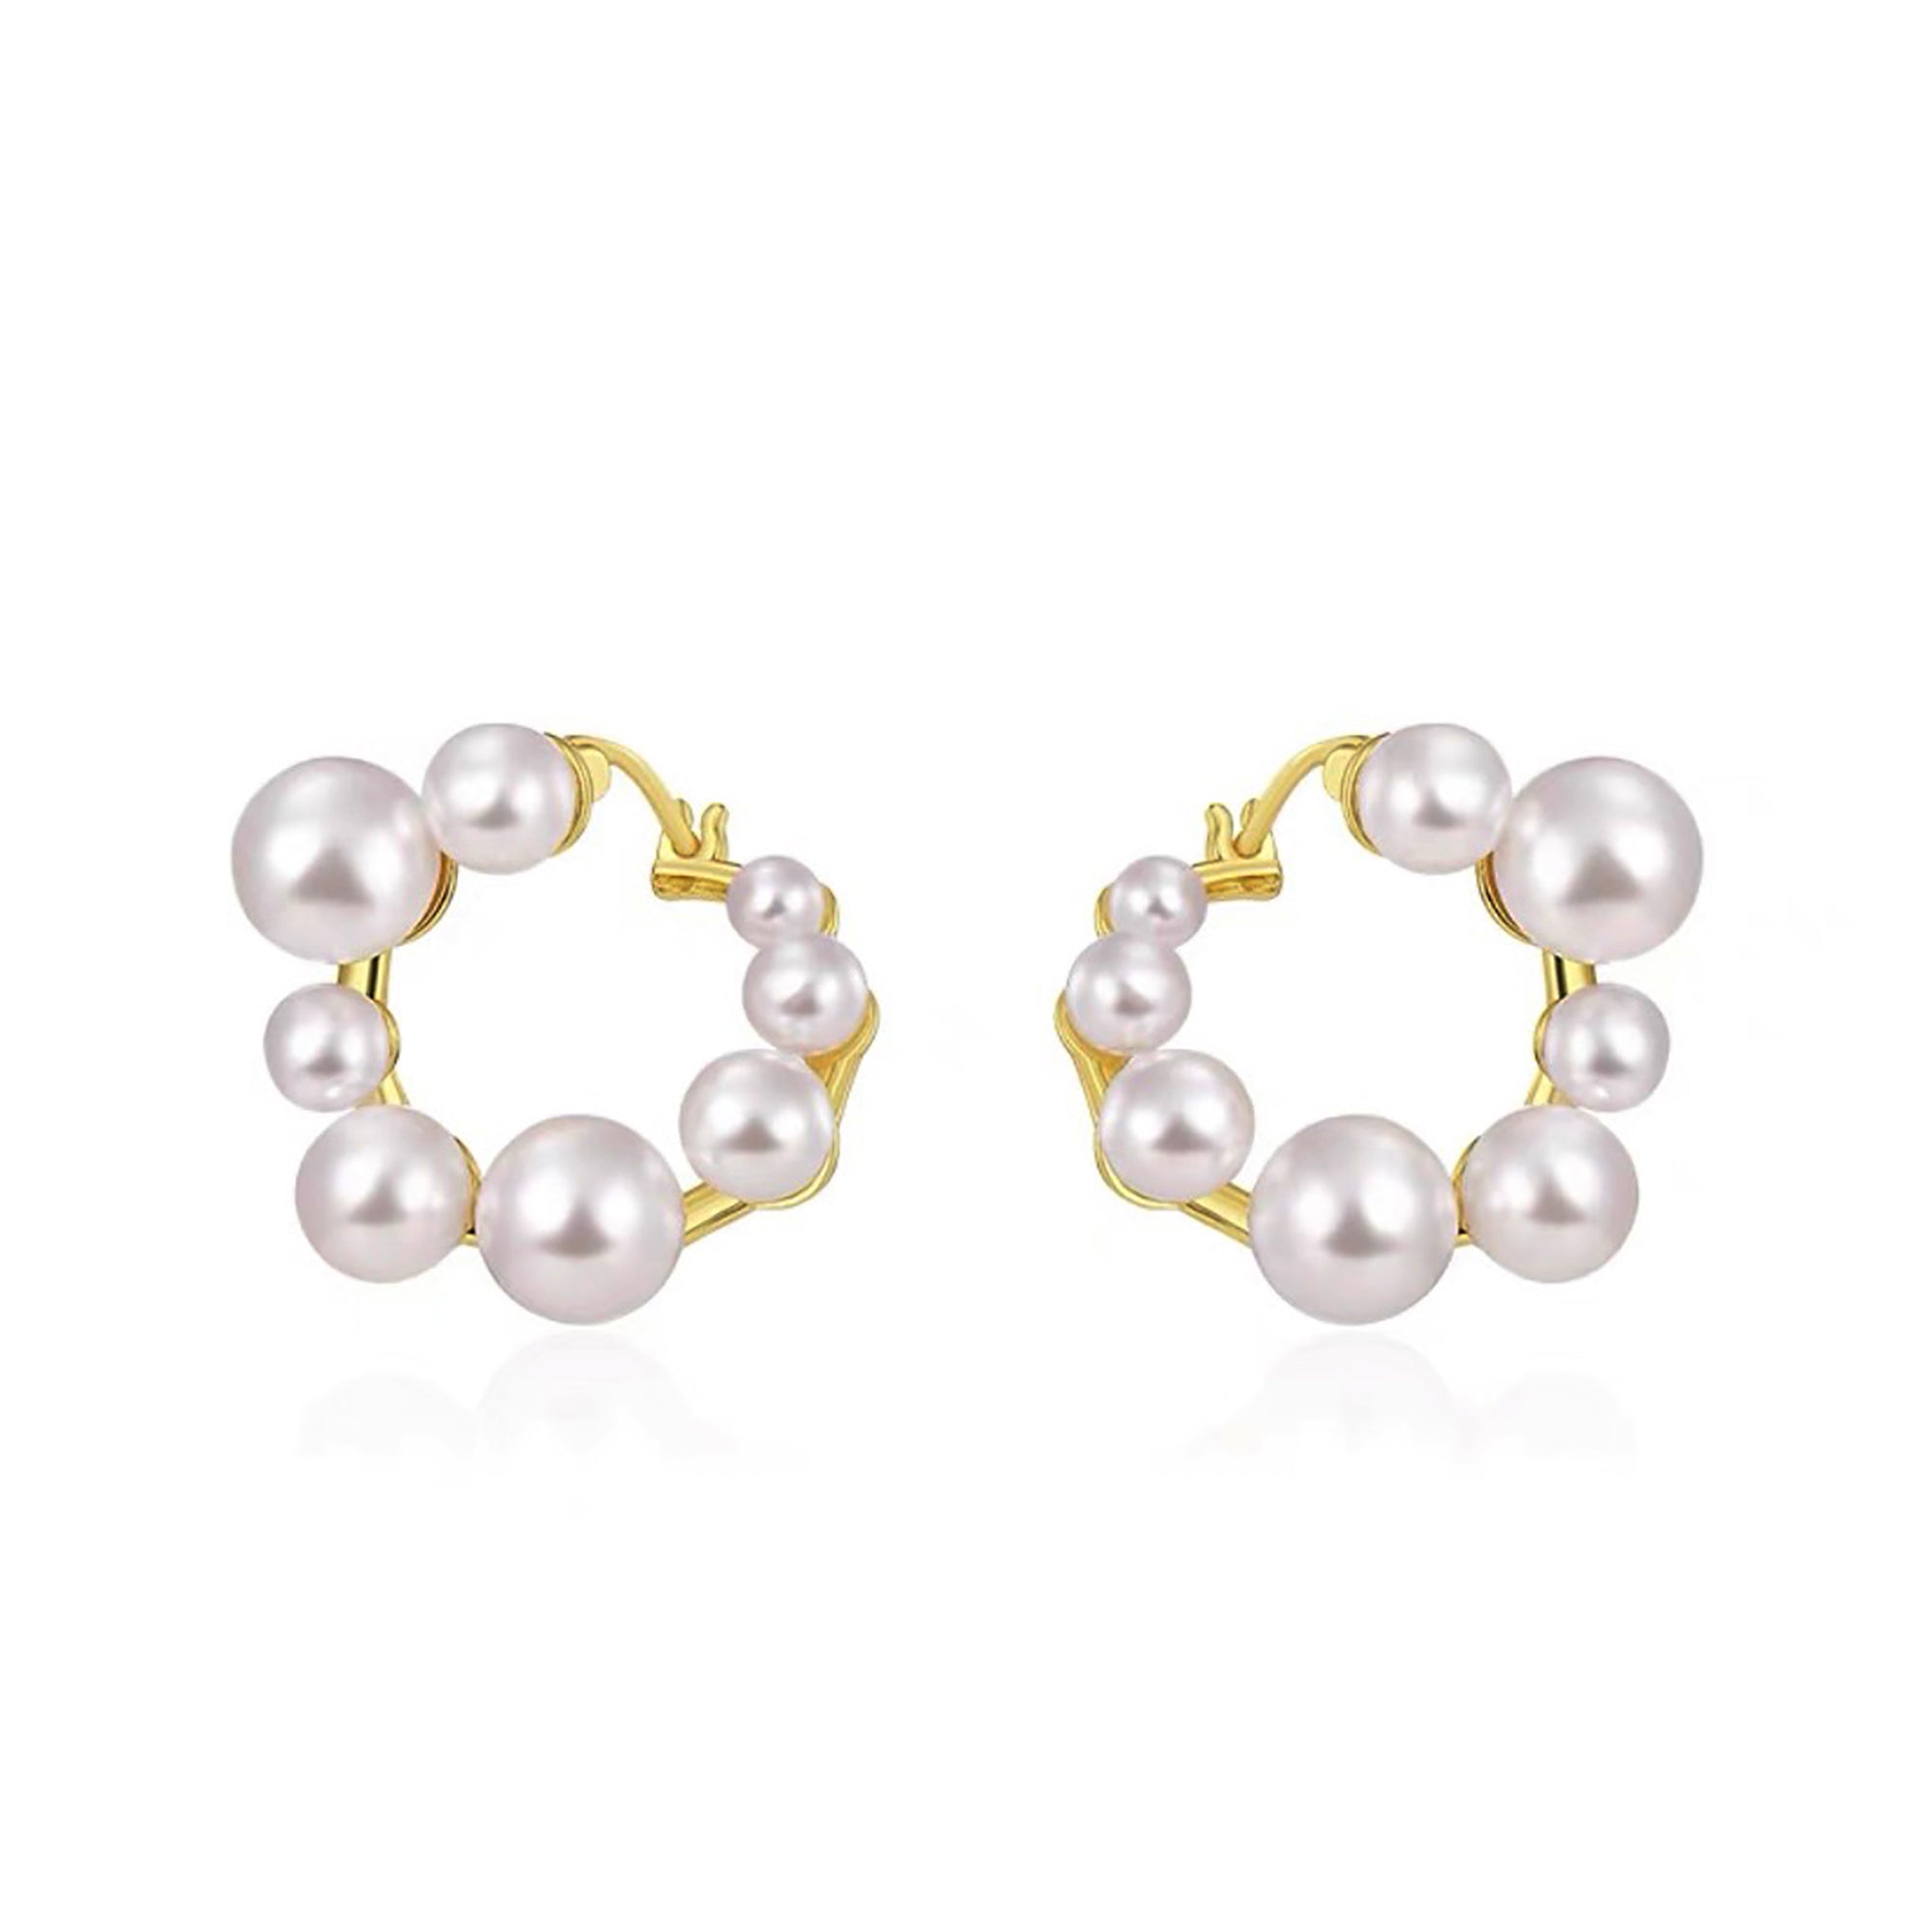 18K Gold Plated w/ Pearl Swirl Hoop Earrings gift holiday